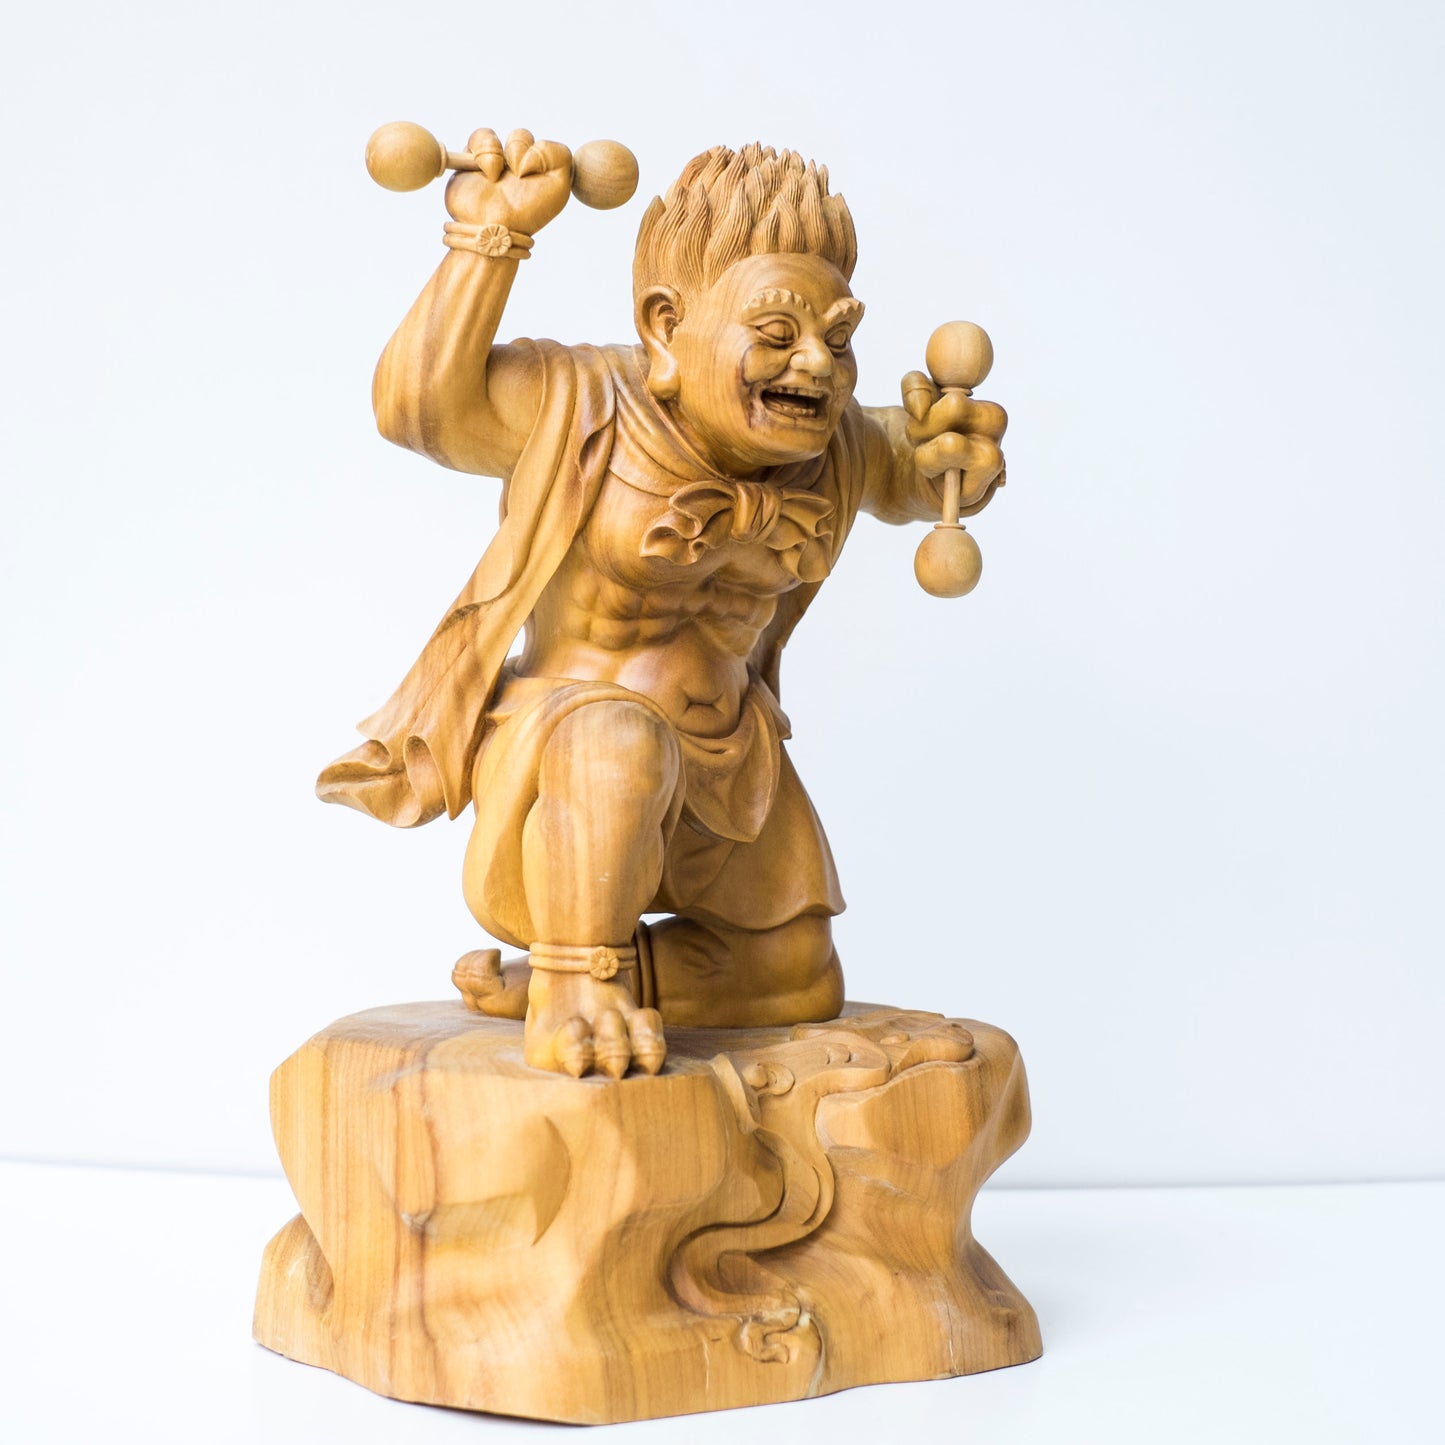 Japanese Fujin Raijin Thunder Lightning Buddhist Buddha Deva King Gods Protector Warrior Wooden Statue Pair